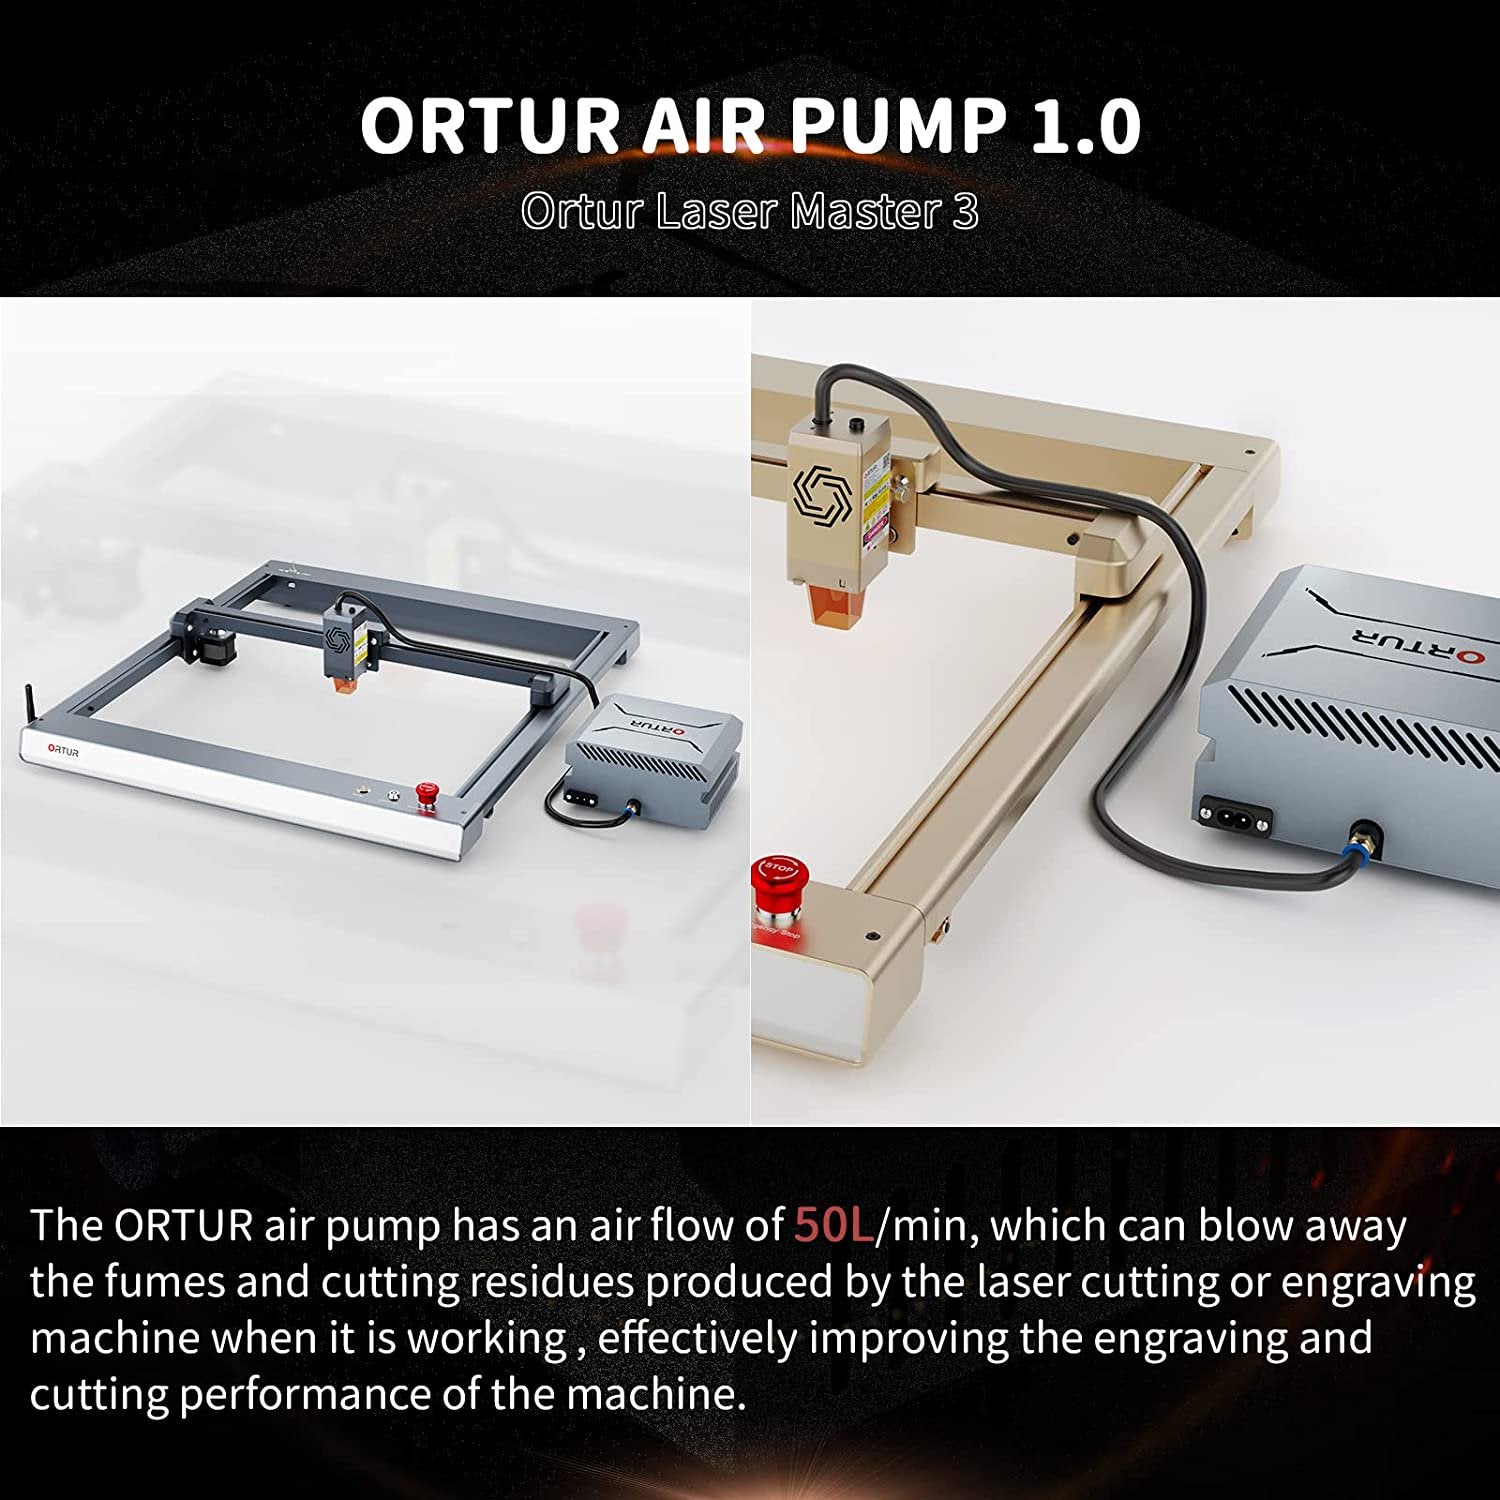 Universal Laser Air Assist Pump Air Compressor 50L/Min Ortur Aufero Laser  Cutting Engraving Machine Adjustable Speed Low Noise